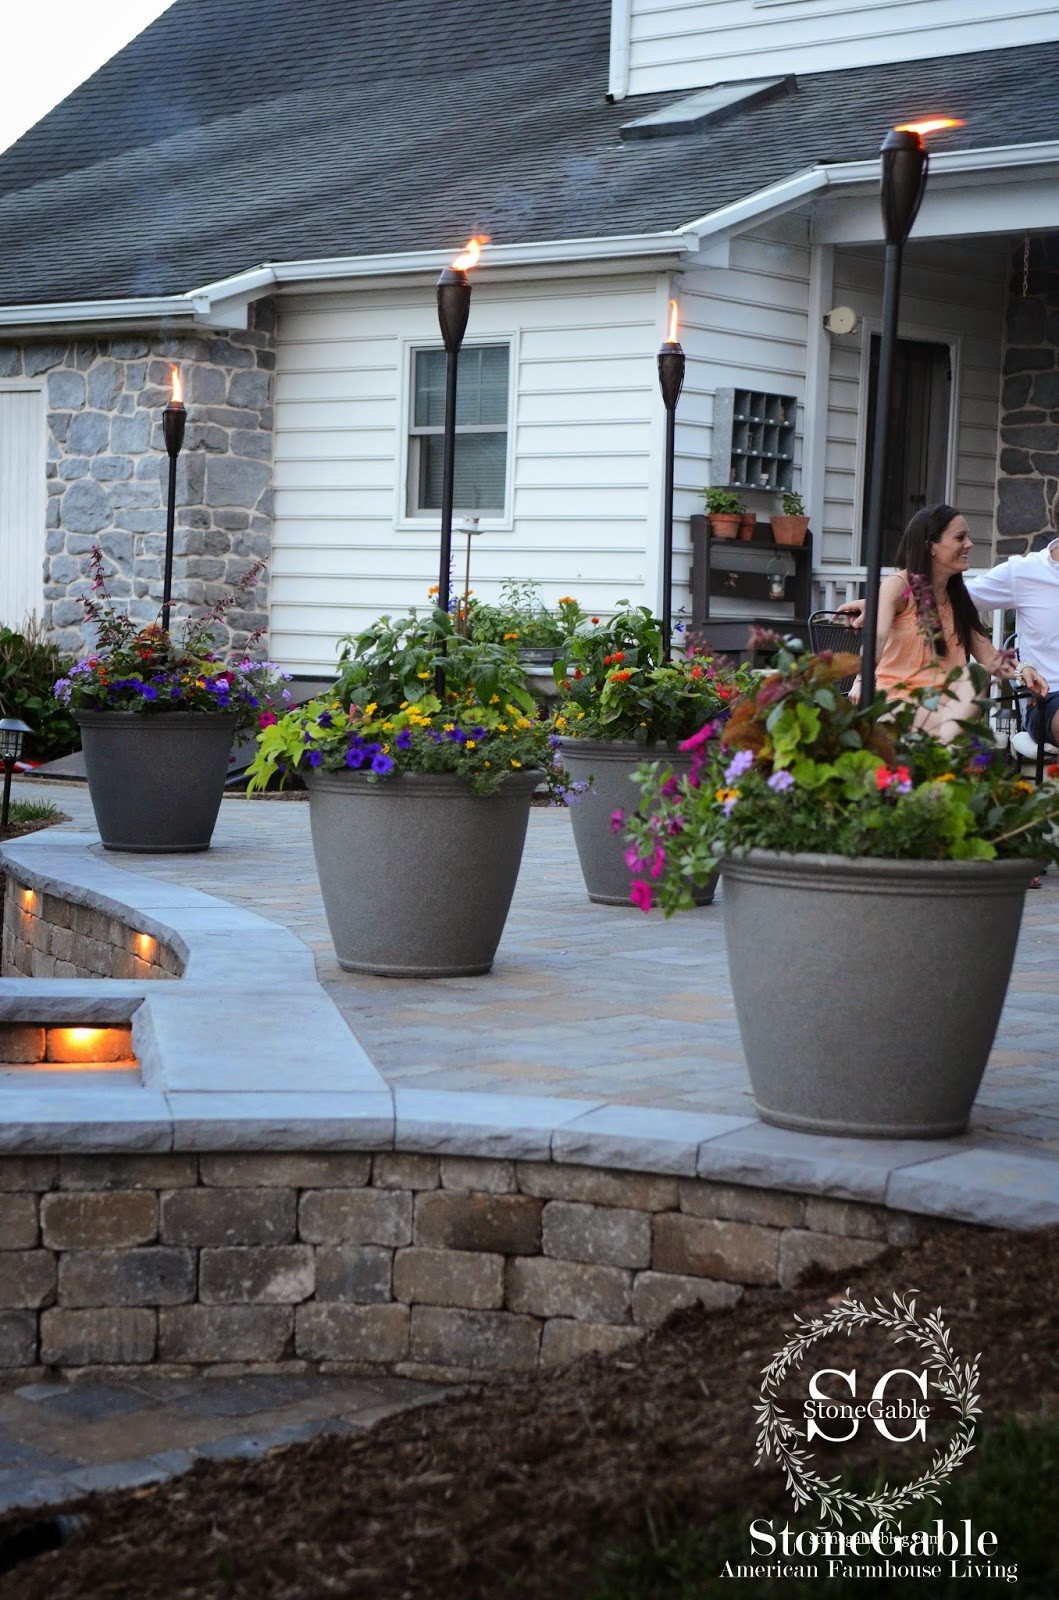 Best ideas about Patio Planter Ideas
. Save or Pin Backyard Landscape 16 Amazing DIY Patio Decoration Ideas Now.